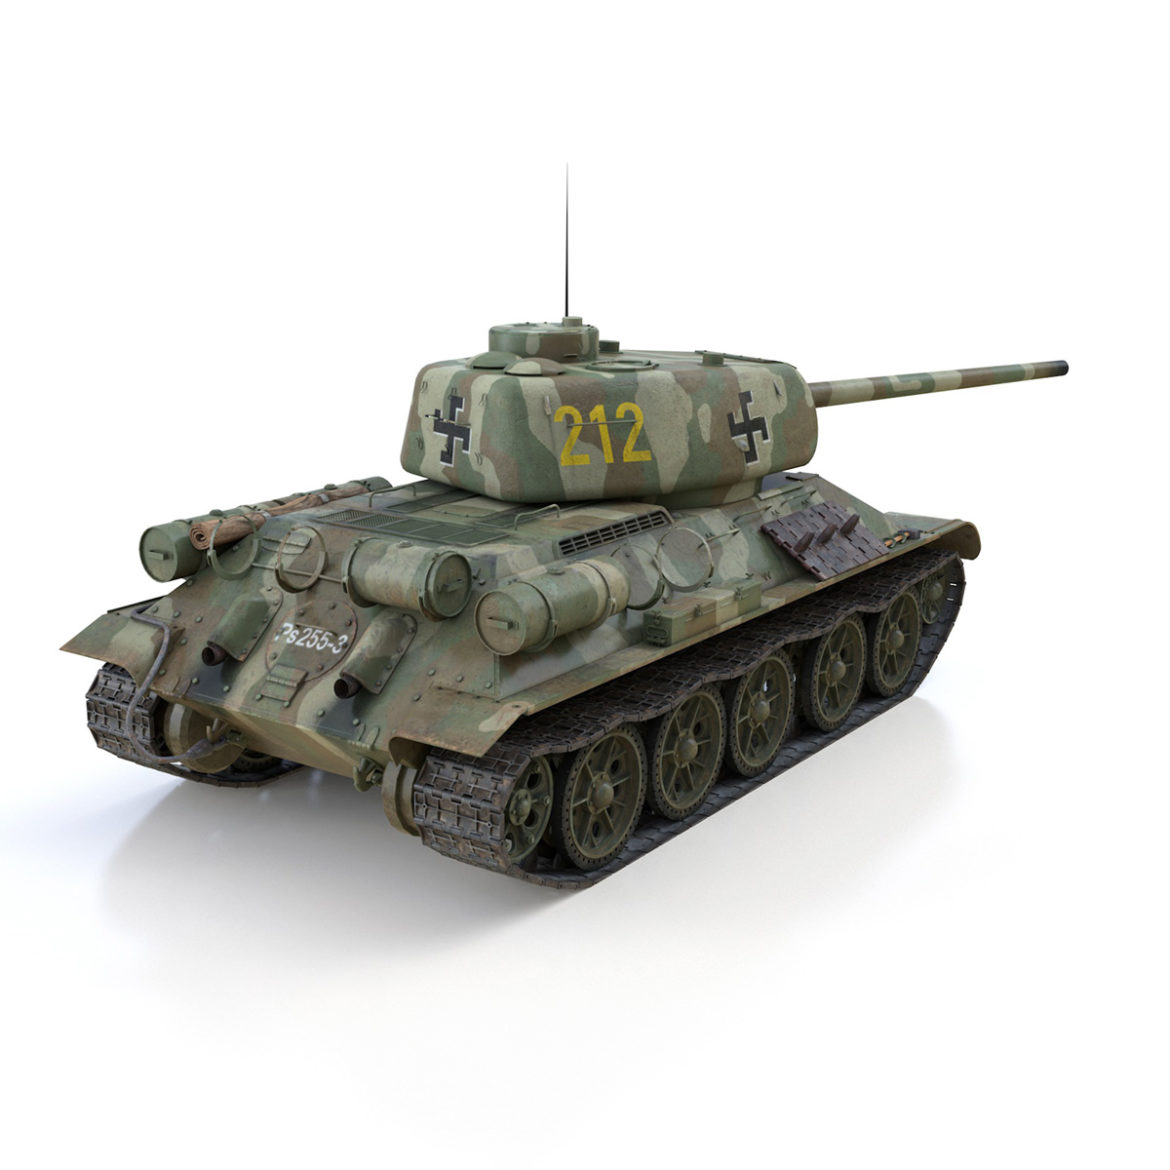 t-34-85 – 212 – finish army 3d model 3ds fbx c4d lwo obj 314640